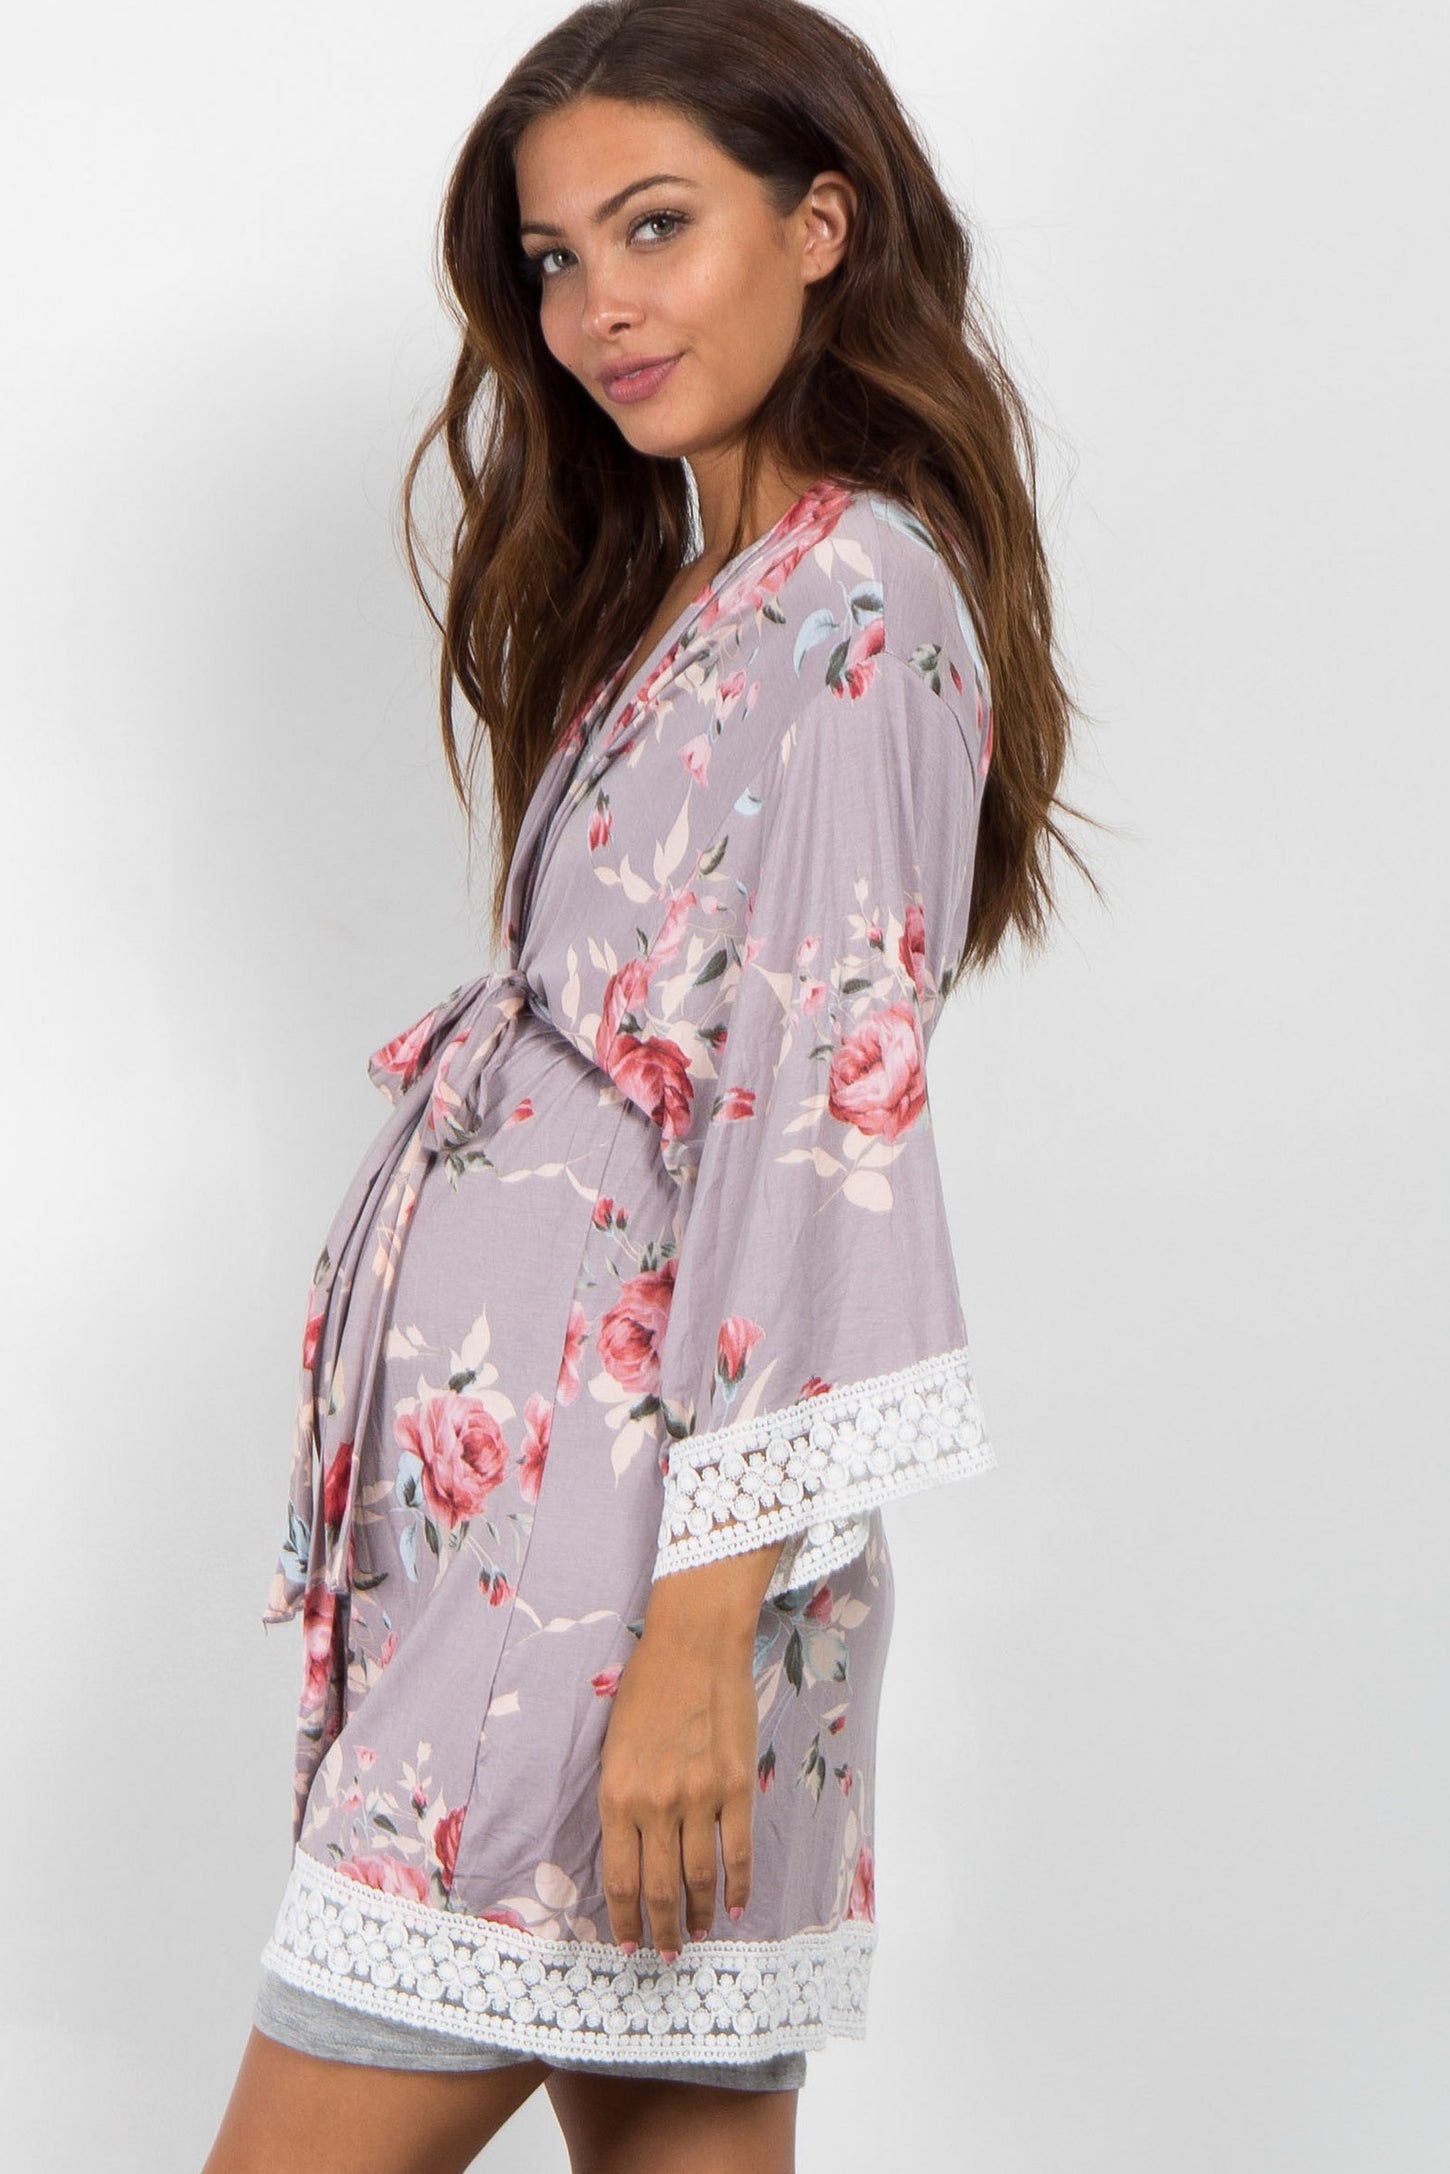 PinkBlush Beige Crochet Trim Delivery/Nursing Maternity Robe